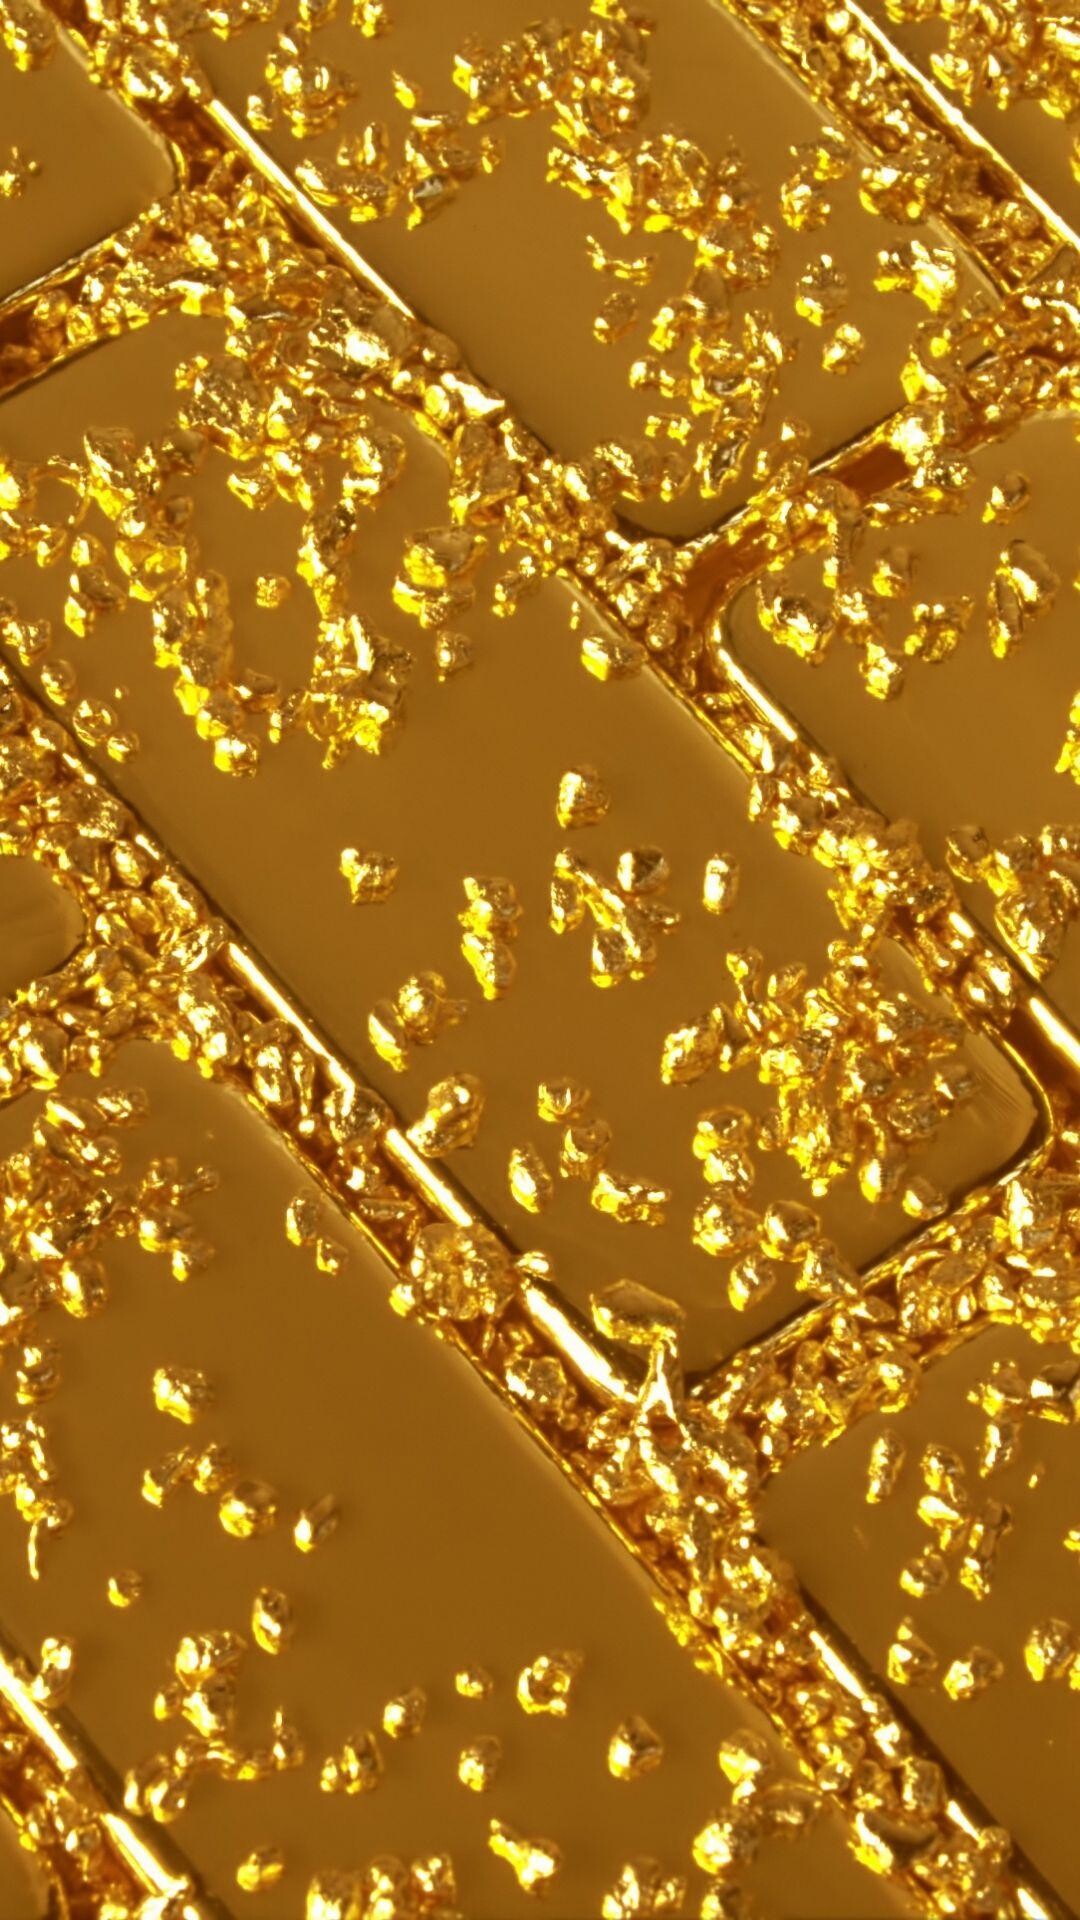 Gold: Gold grains, Shimmering metallic pieces, A durable golden decorative finish. 1080x1920 Full HD Wallpaper.